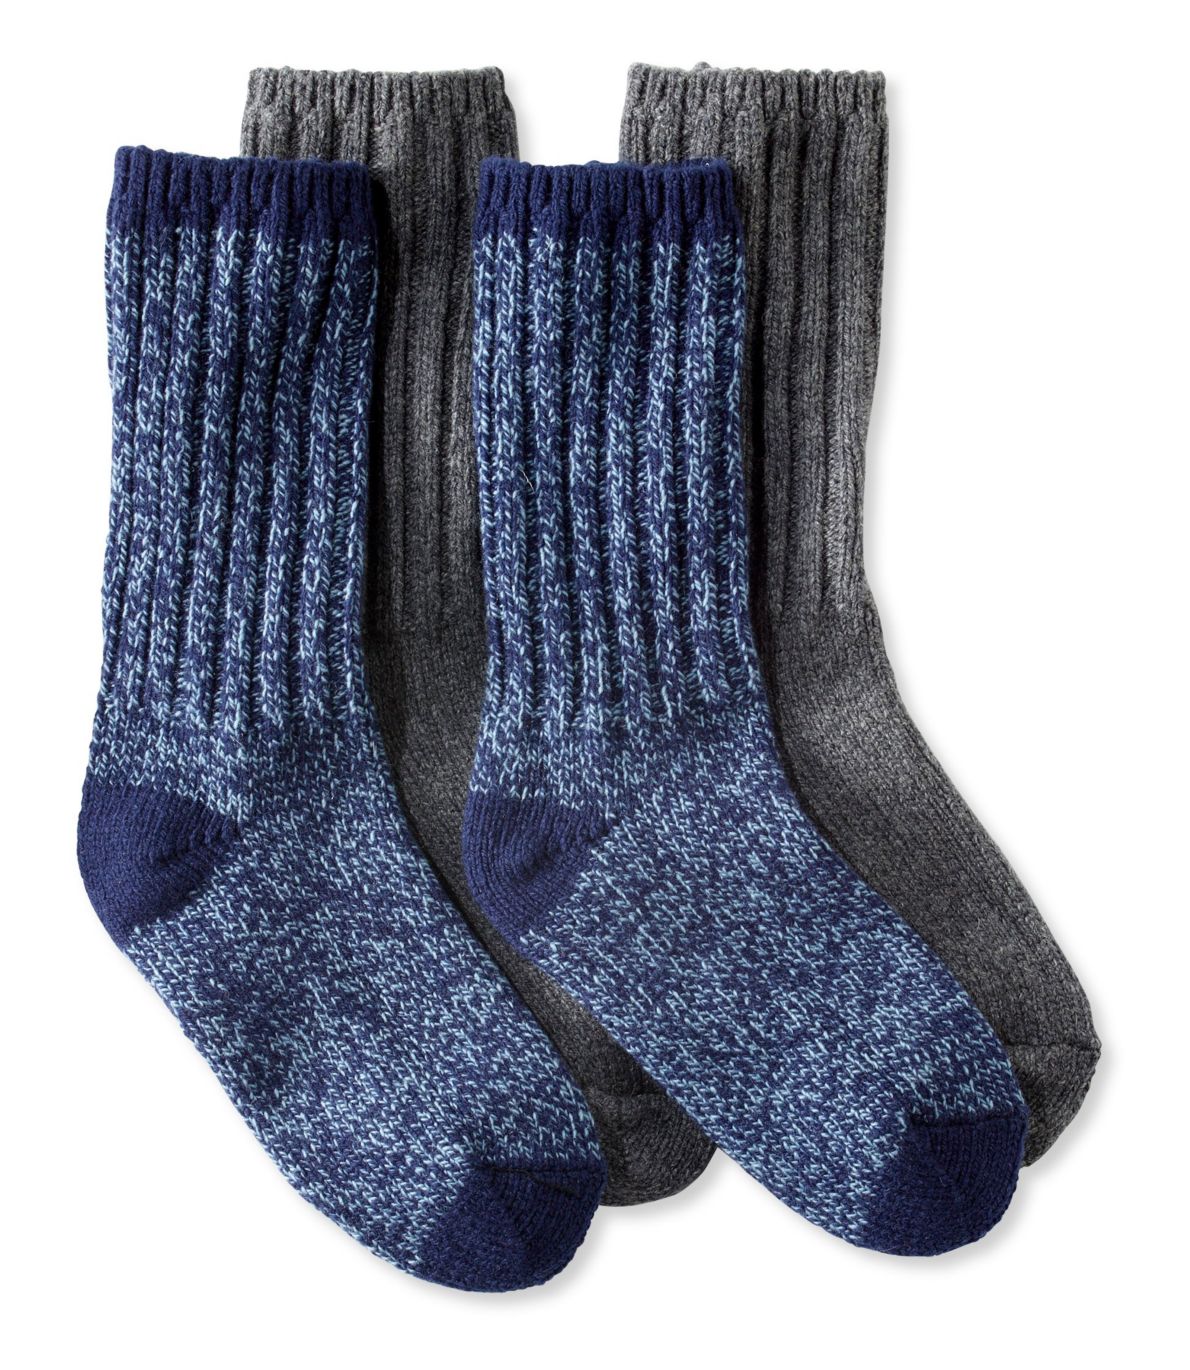 Adults' Wool-Blend Ragg Socks, Two Pairs